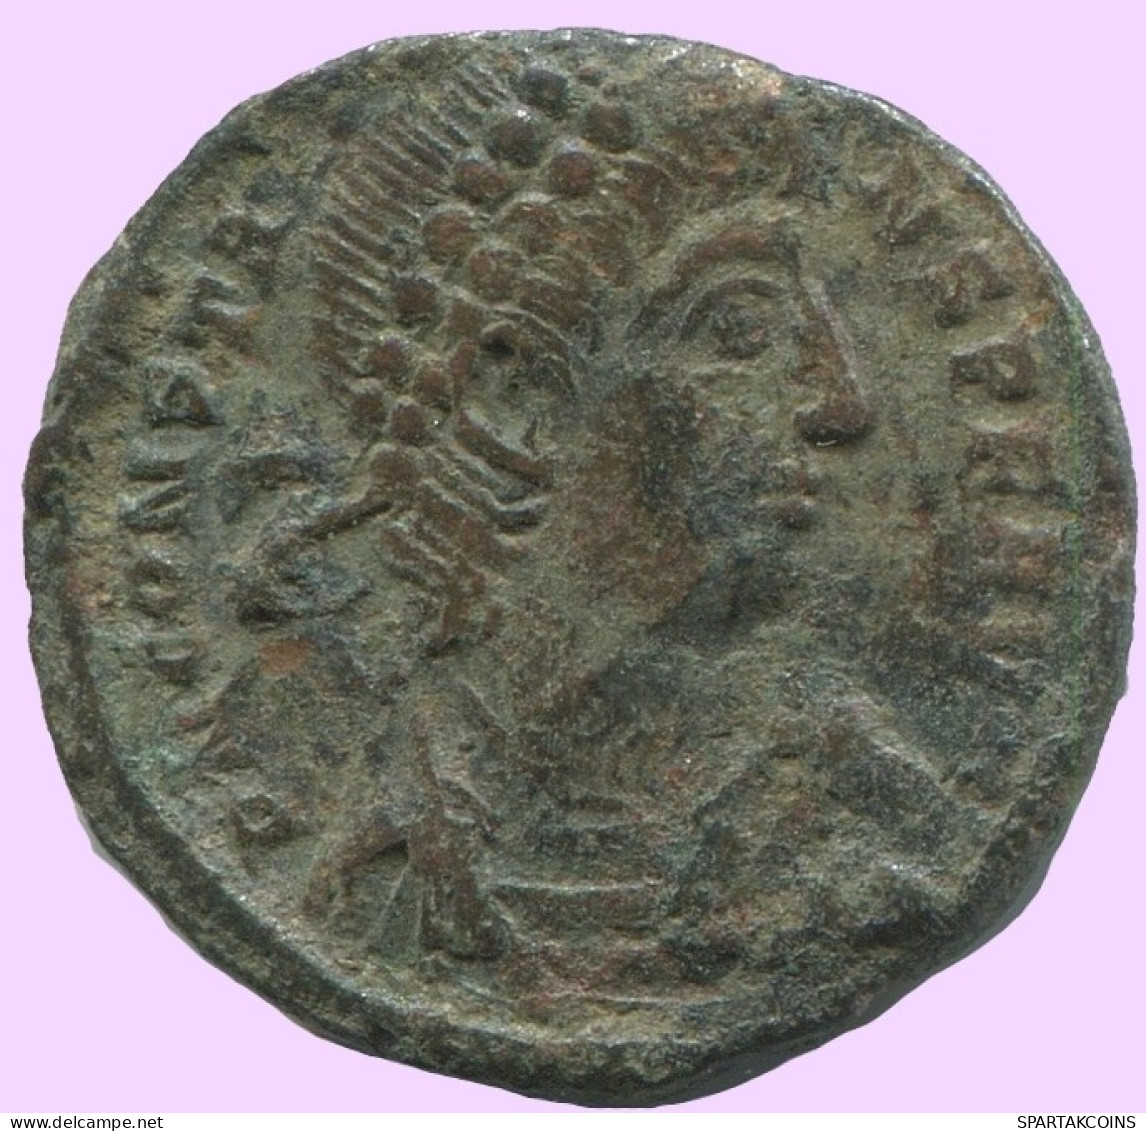 LATE ROMAN EMPIRE Follis Ancient Authentic Roman Coin 3.2g/17mm #ANT2066.7.U.A - La Fin De L'Empire (363-476)